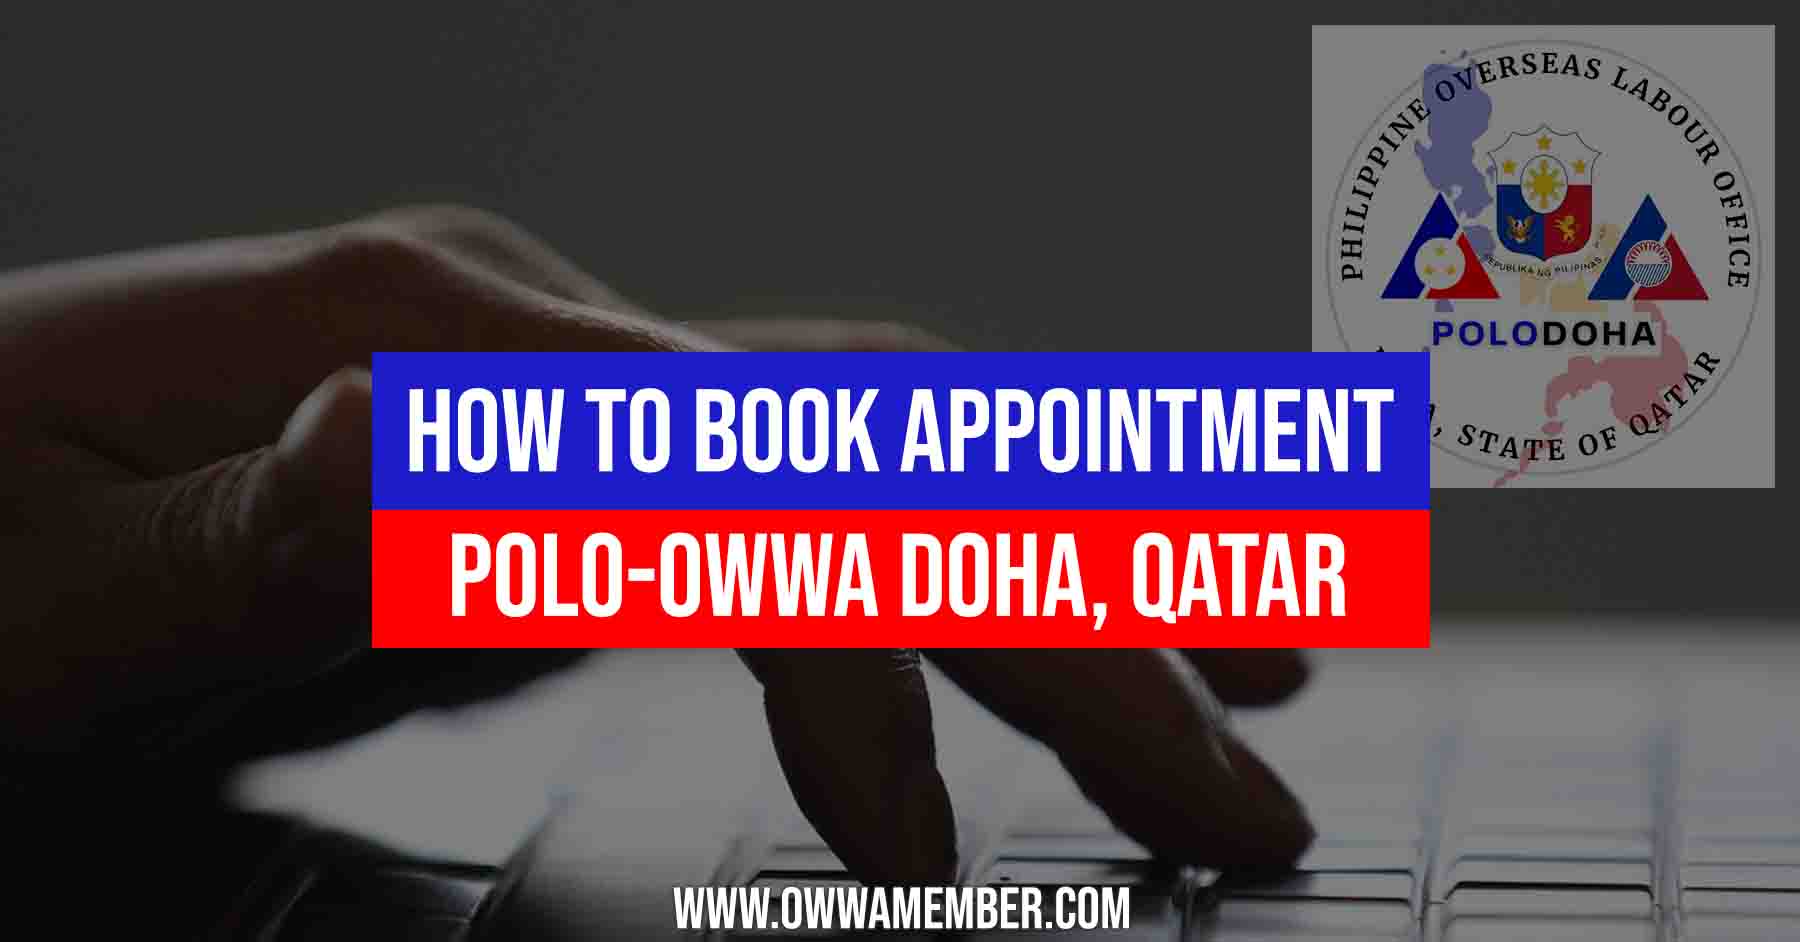 polo-owwa doha qatar appointment